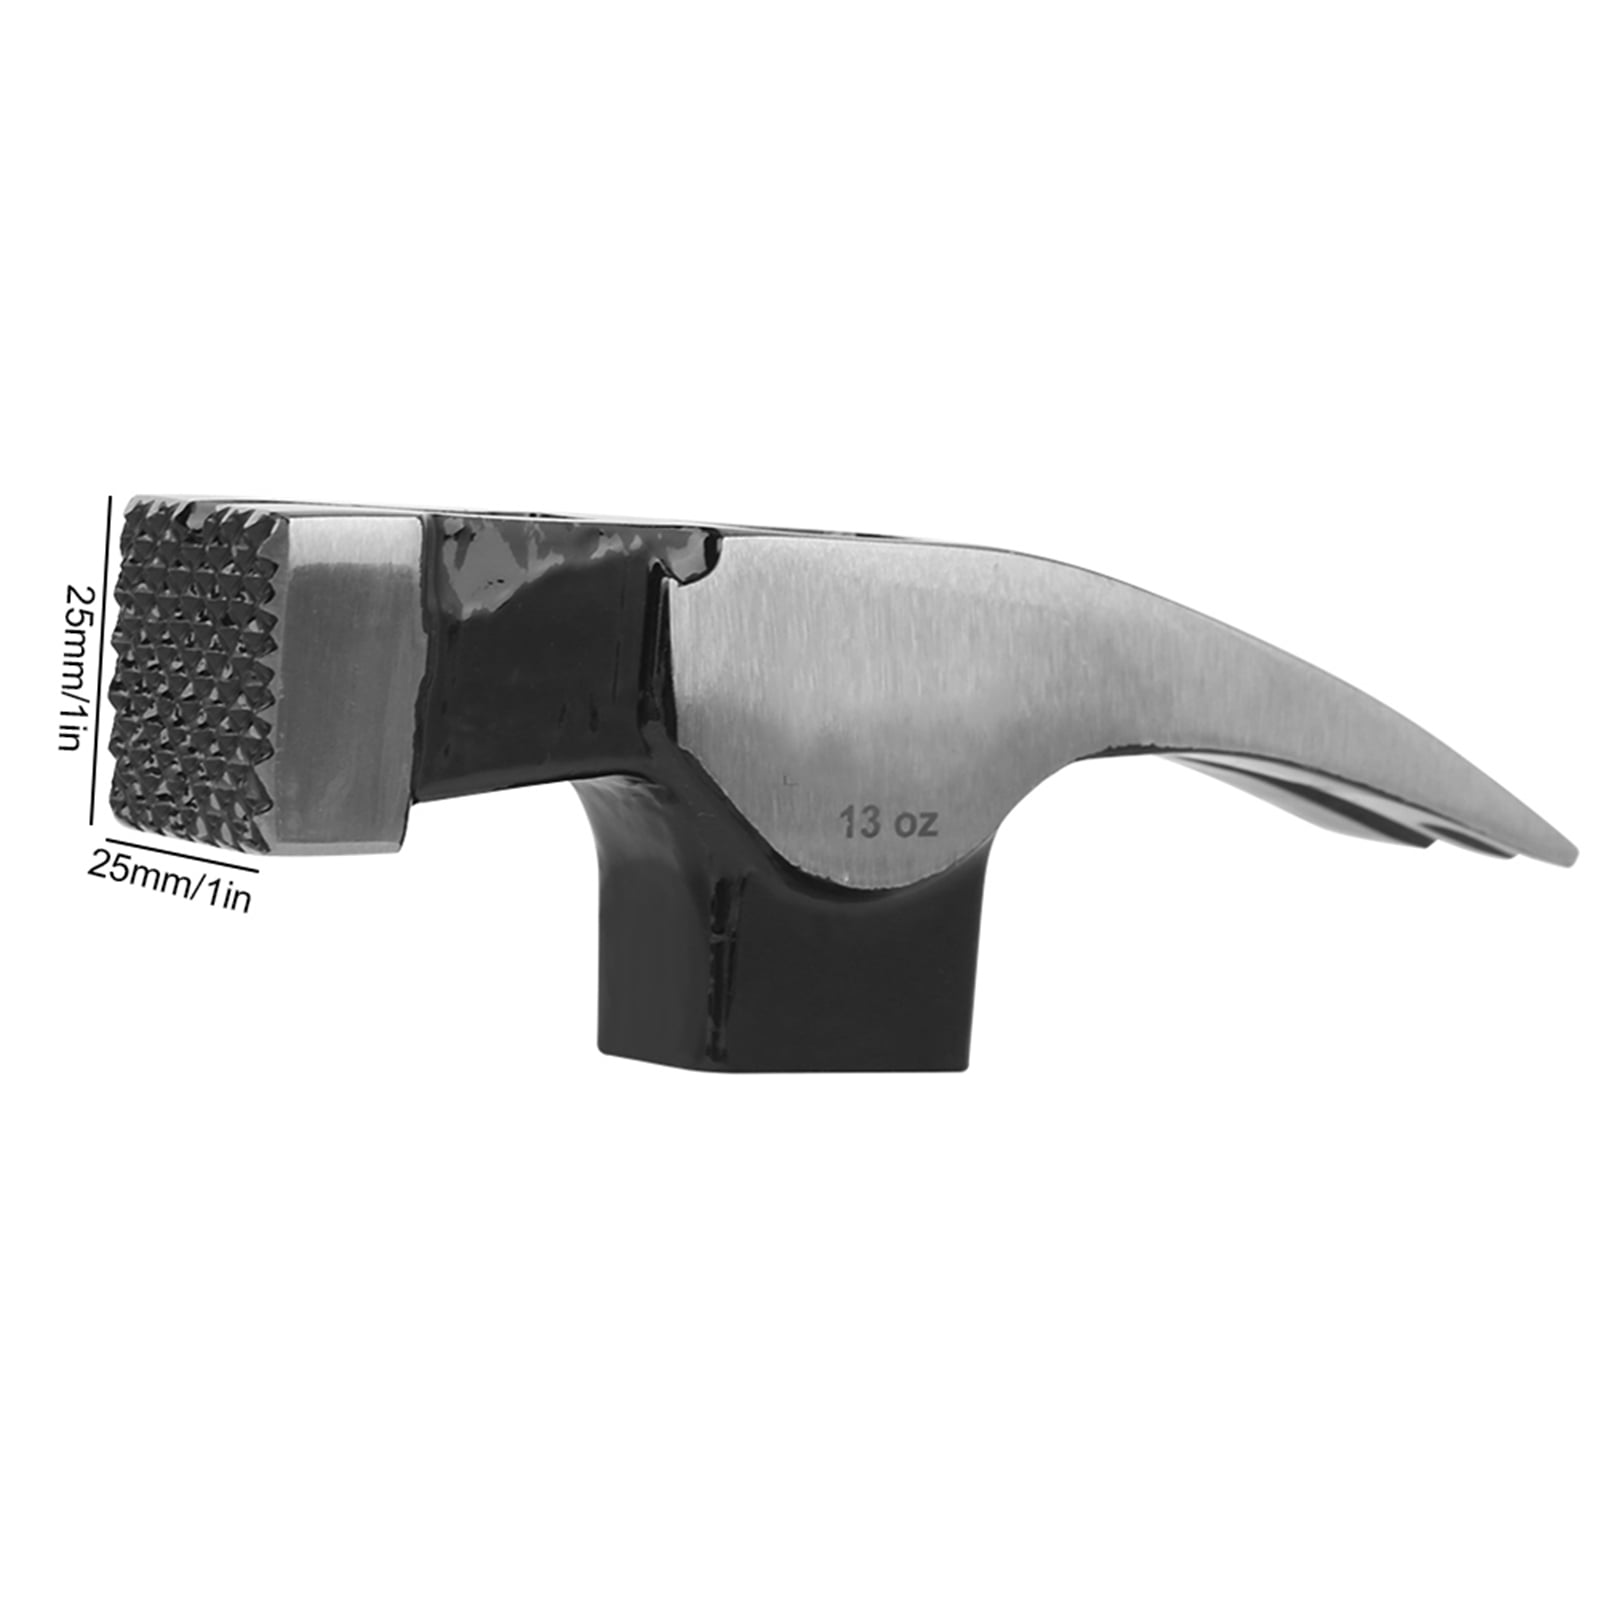 STARWORK 20 oz Hammer with Comfort Grip, Nailing Hammer Steel Head Steel  Handle, AntiVibe, Rip Claw